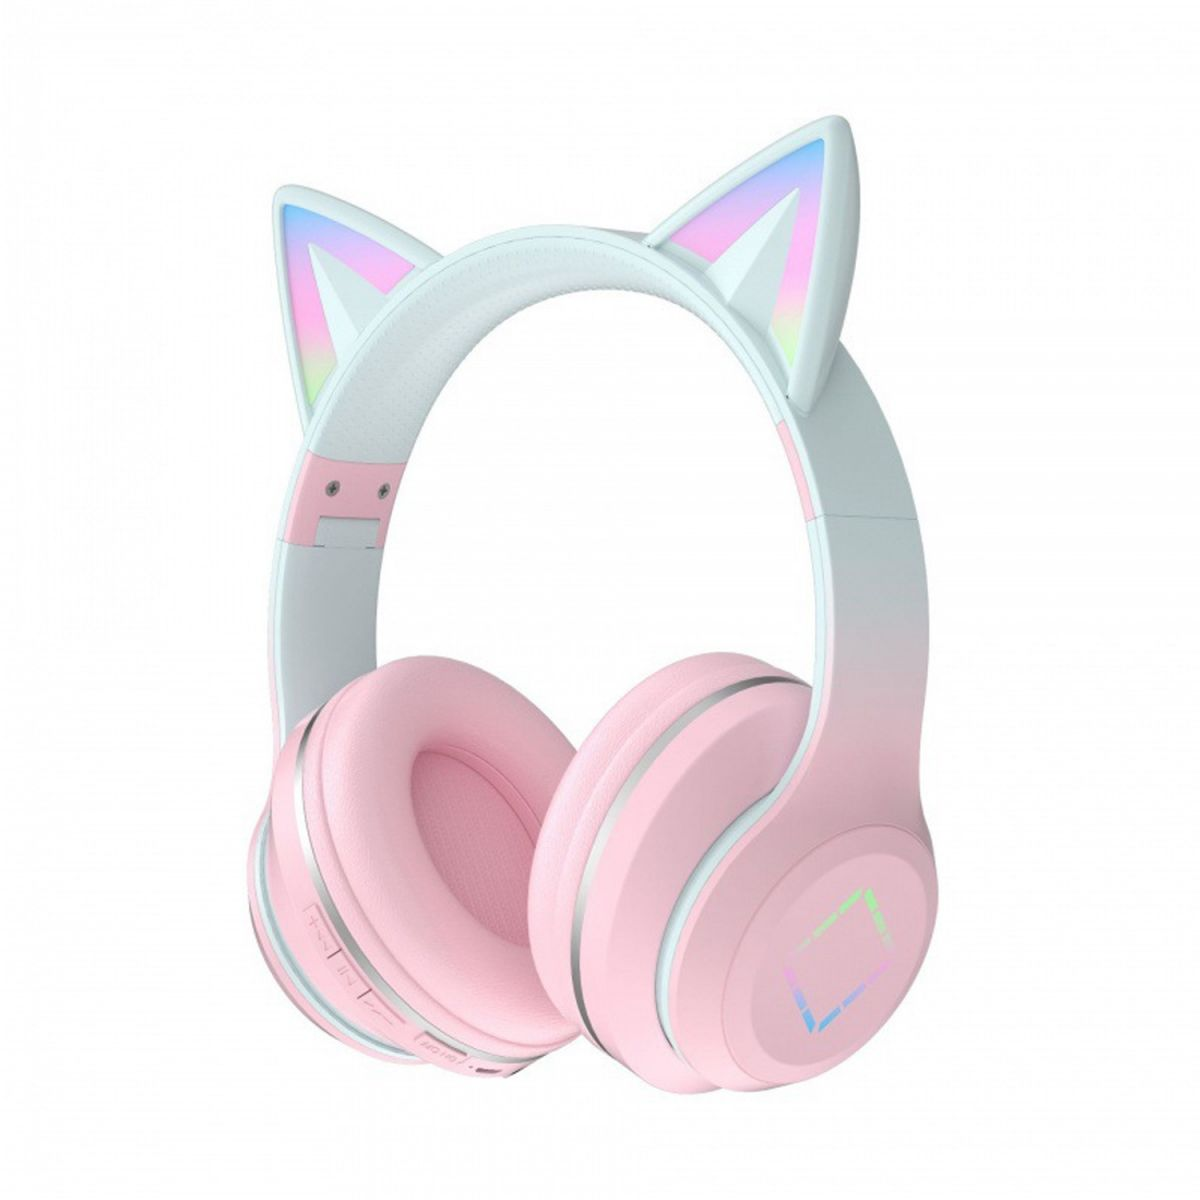 DIIDA Home Office, Kopfhörer,Over-Ear,Noise-Cancelling,für Kirschblütenpulver Kopfhörer Over-ear Bluetooth-Headset,Katzenohr Bluetooth